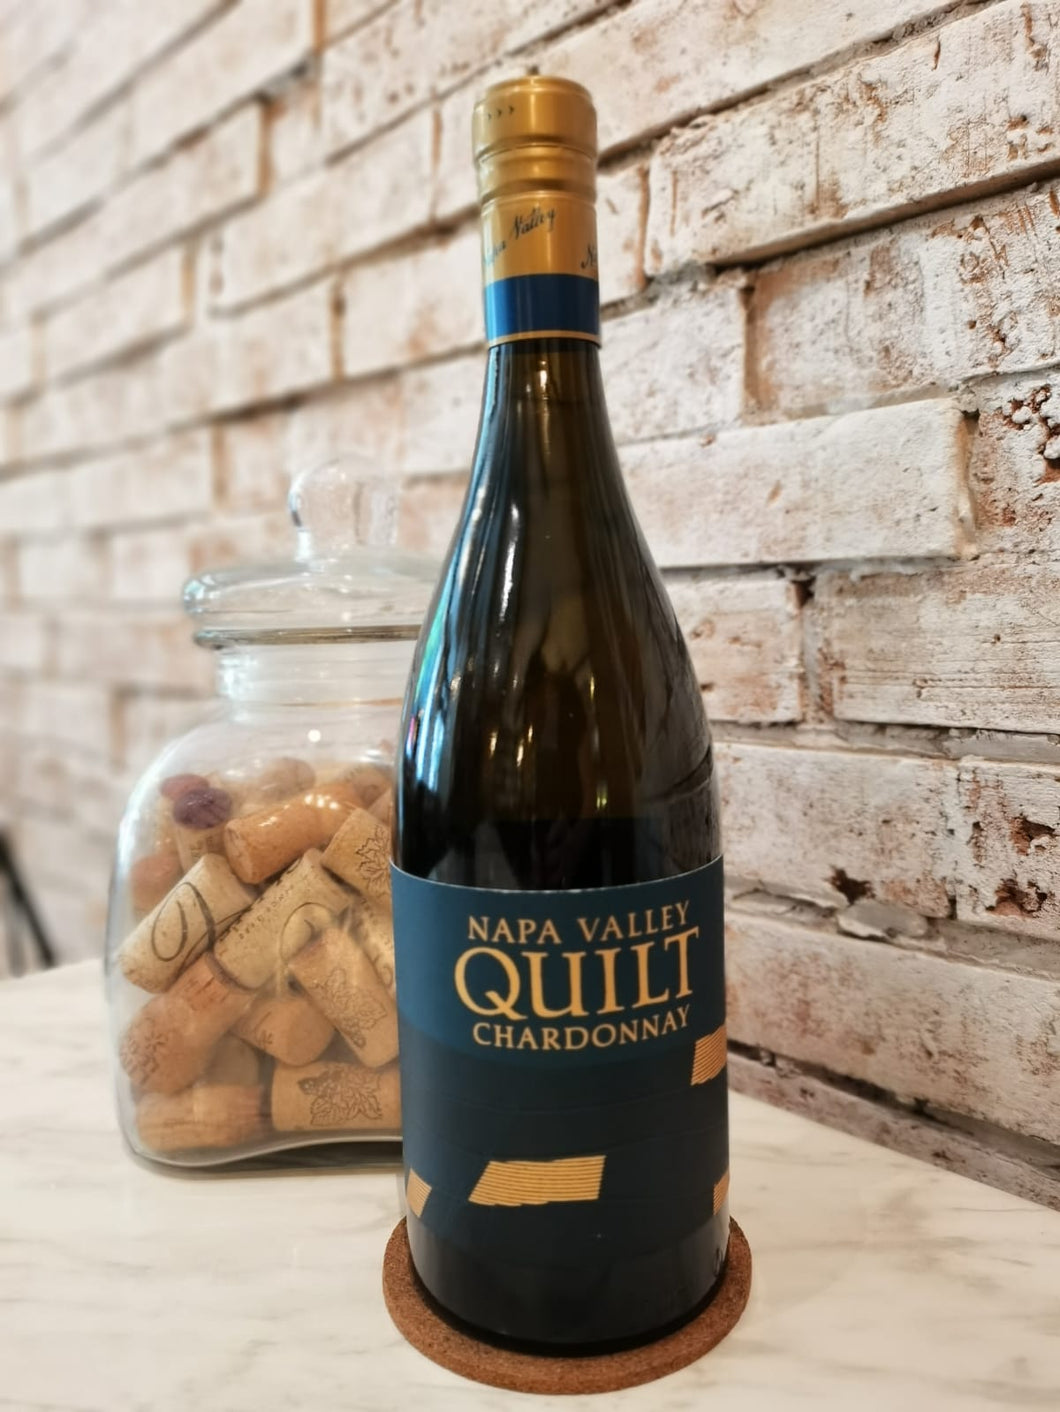 Quilt Chardonnay 2018 - Napa Valley California